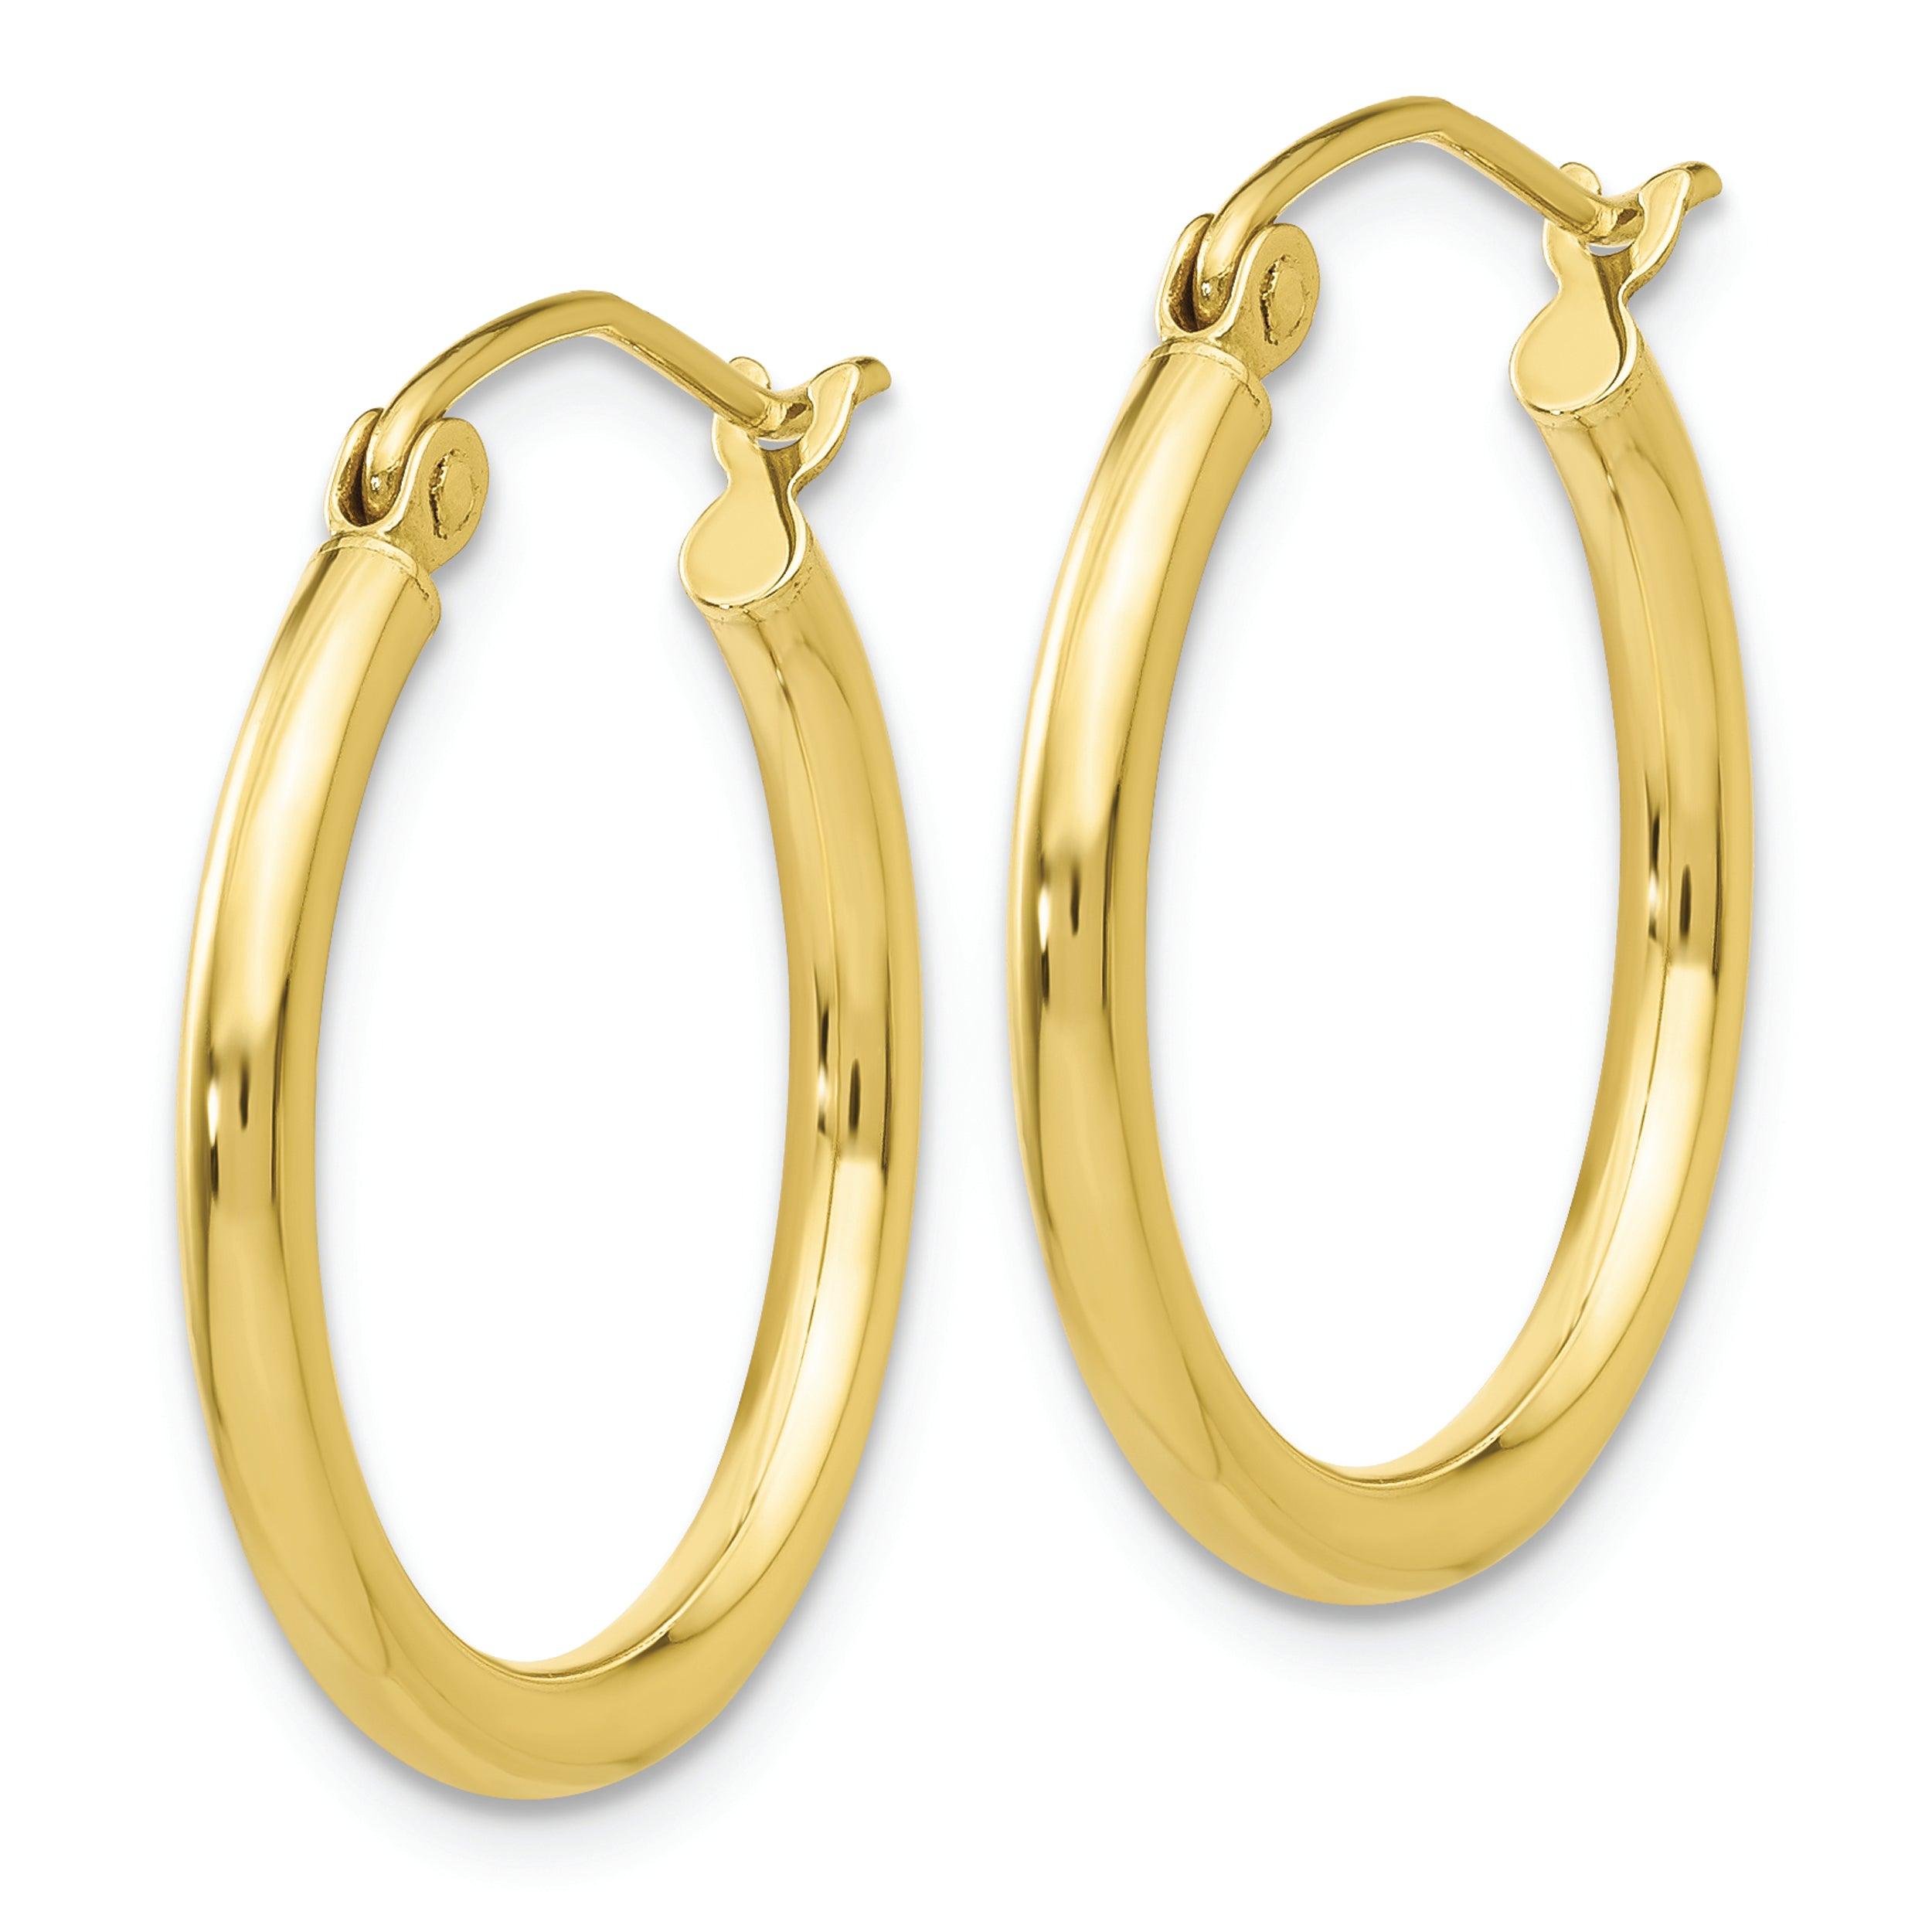 Quality Gold Earrings 10K Polished 2mm Tube Hoop Earrings